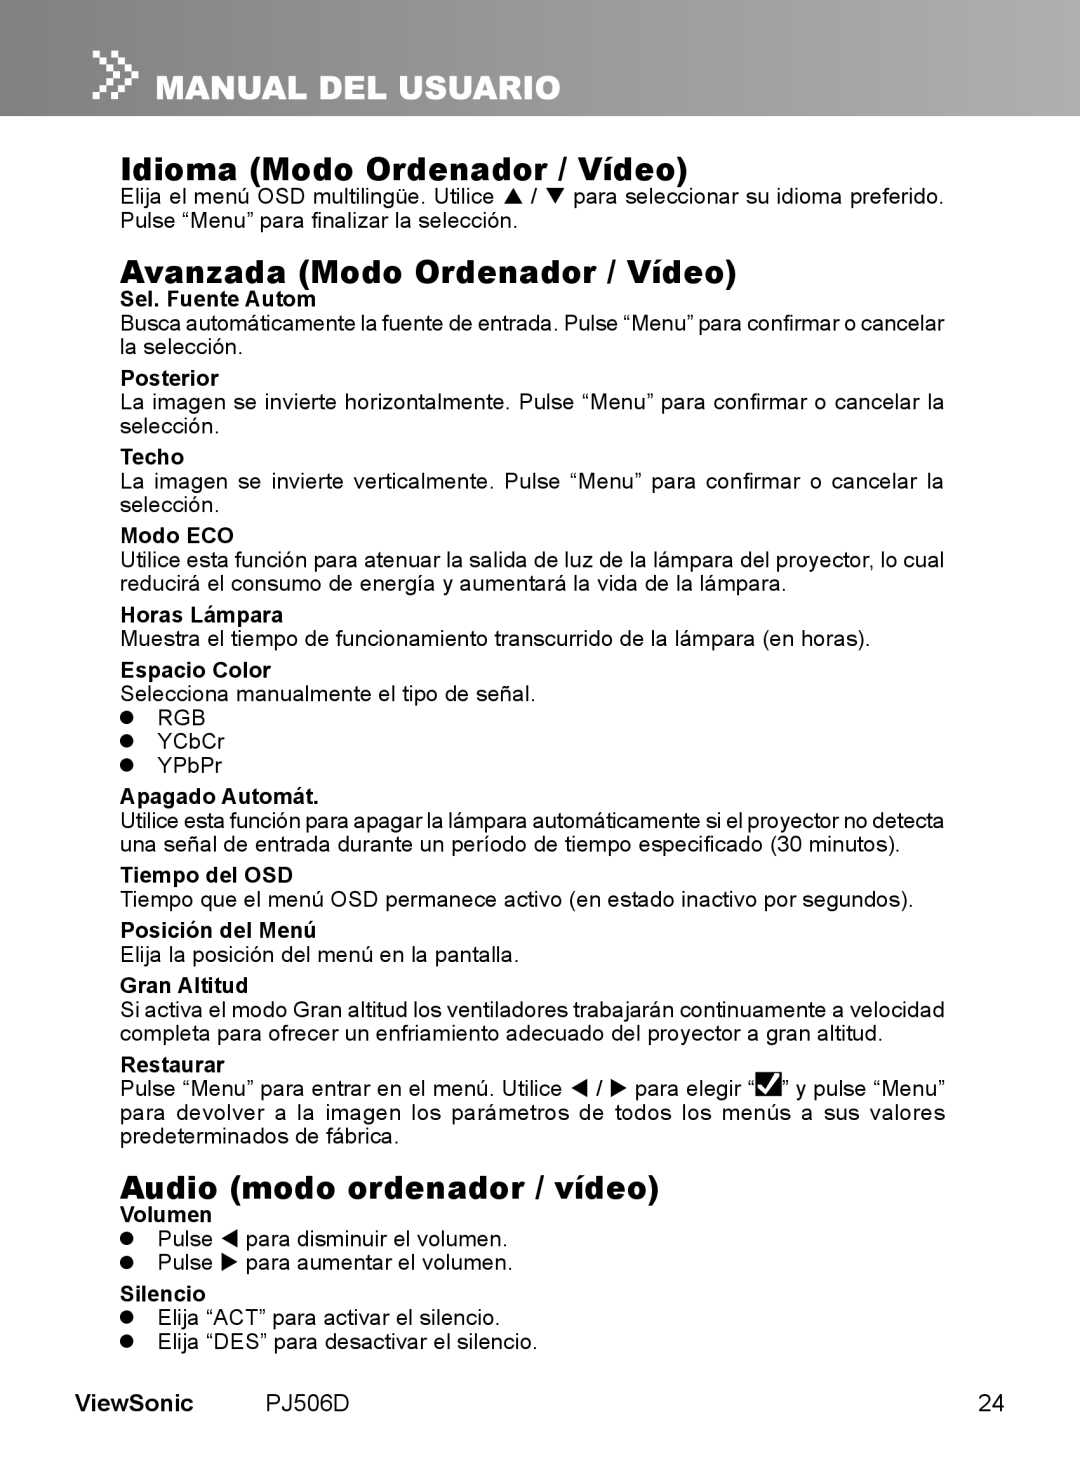 ViewSonic VS11452 Idioma Modo Ordenador / Vídeo, Avanzada Modo Ordenador / Vídeo, Audio modo ordenador / vídeo, ViewSonic 